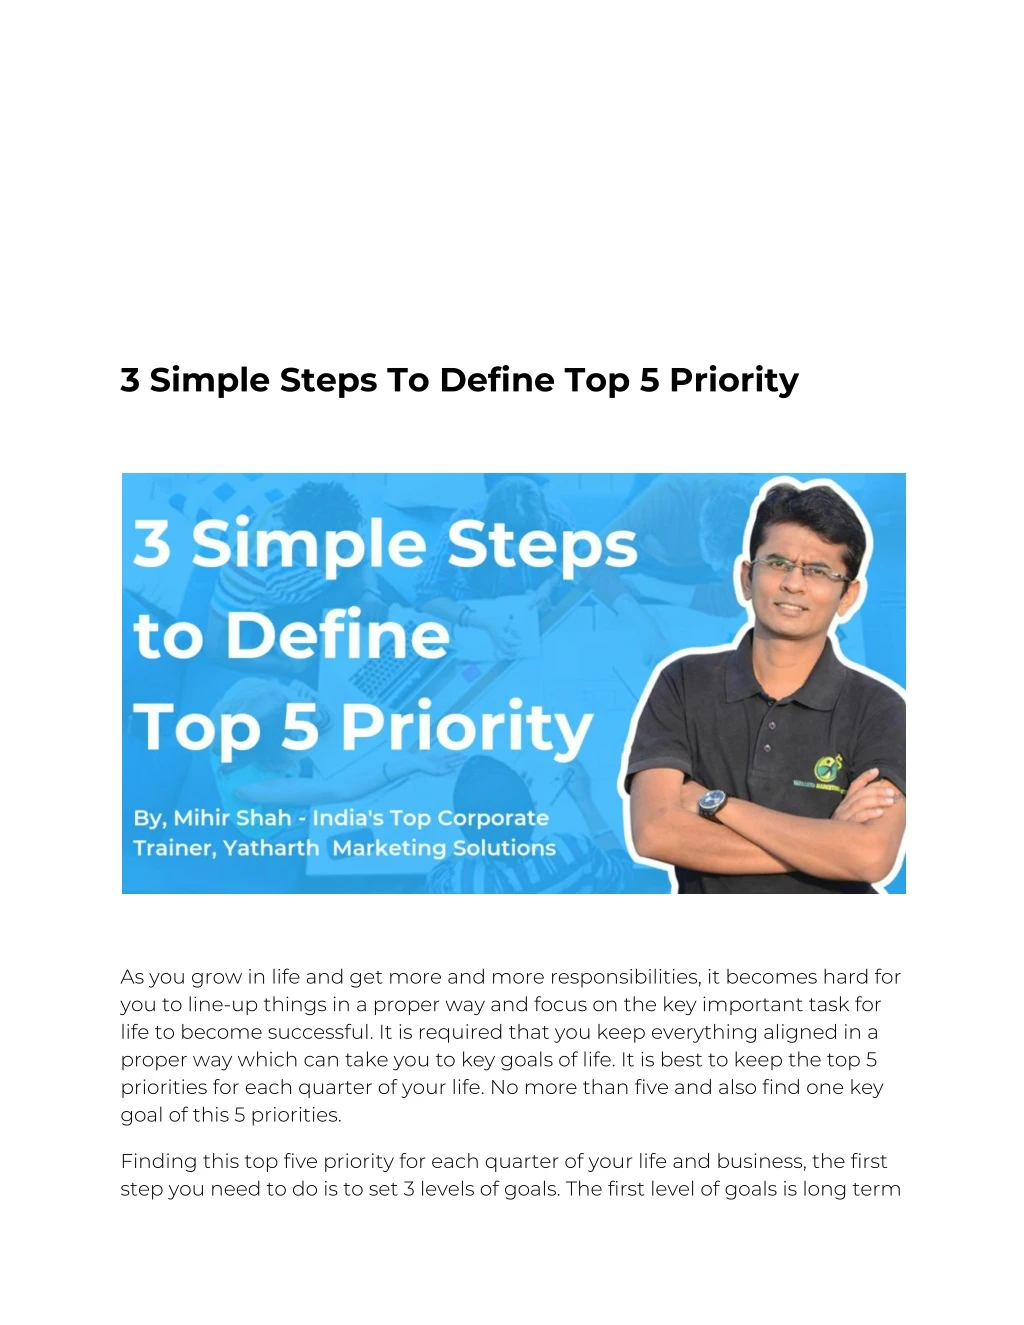 3 simple steps to define top 5 priority